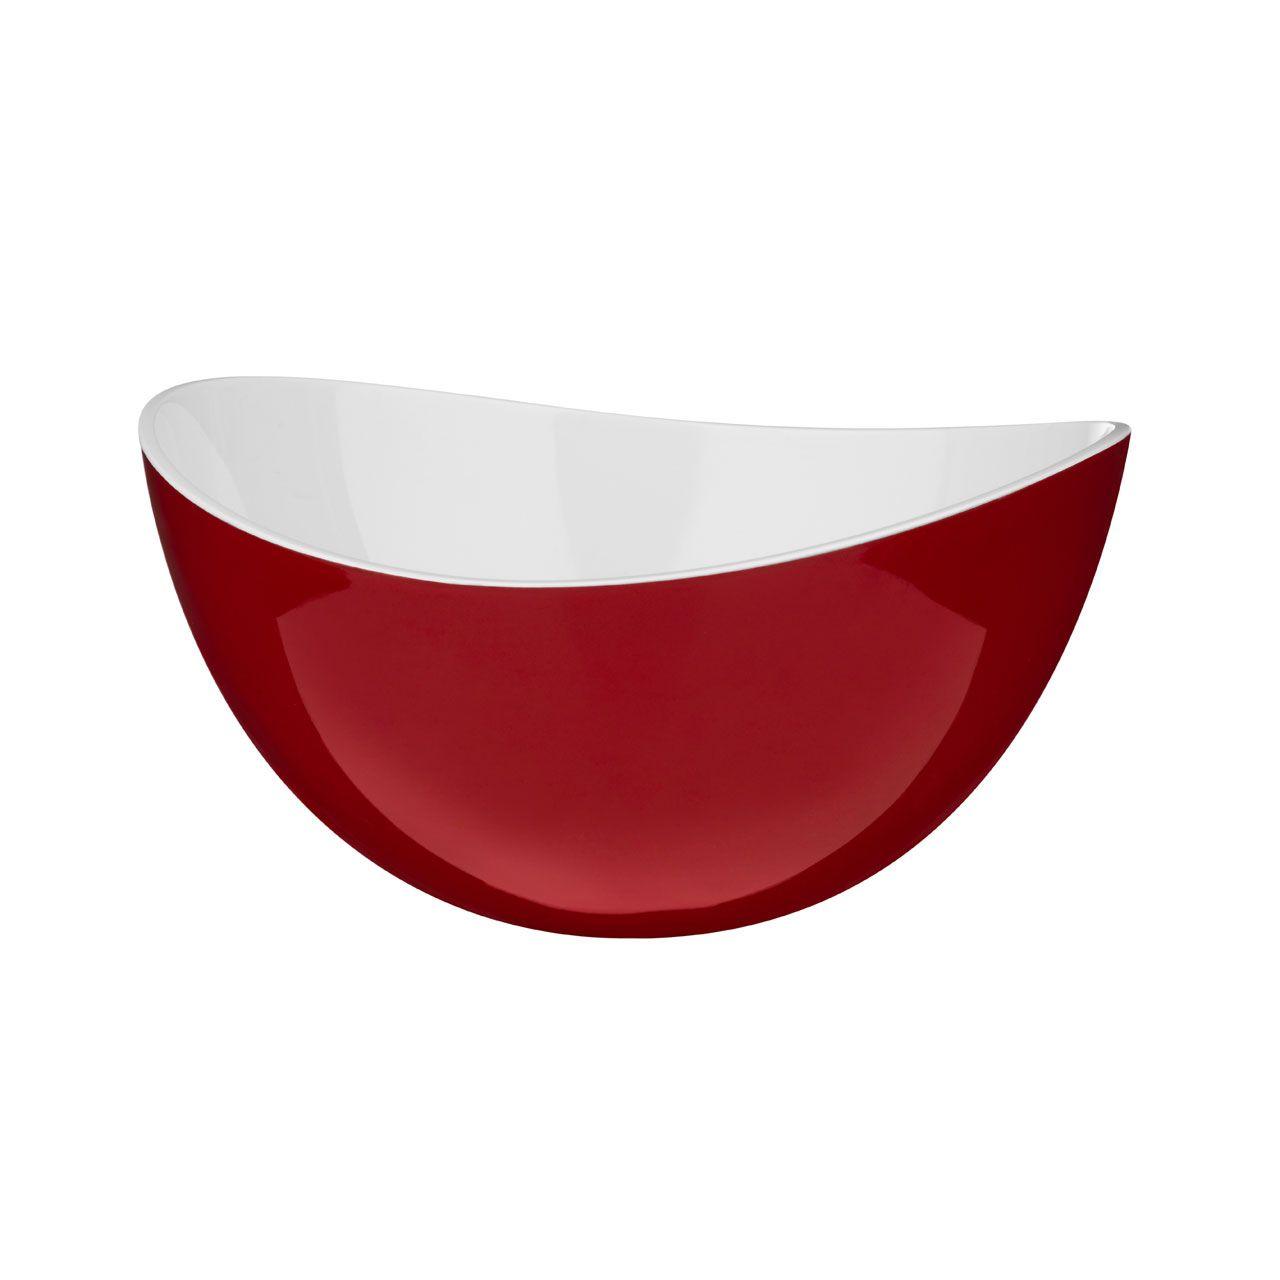 Red and White Bowl Logo - Premier Red & White Plastic Serving Bowl Kitchen Salad Fruit Dish ...